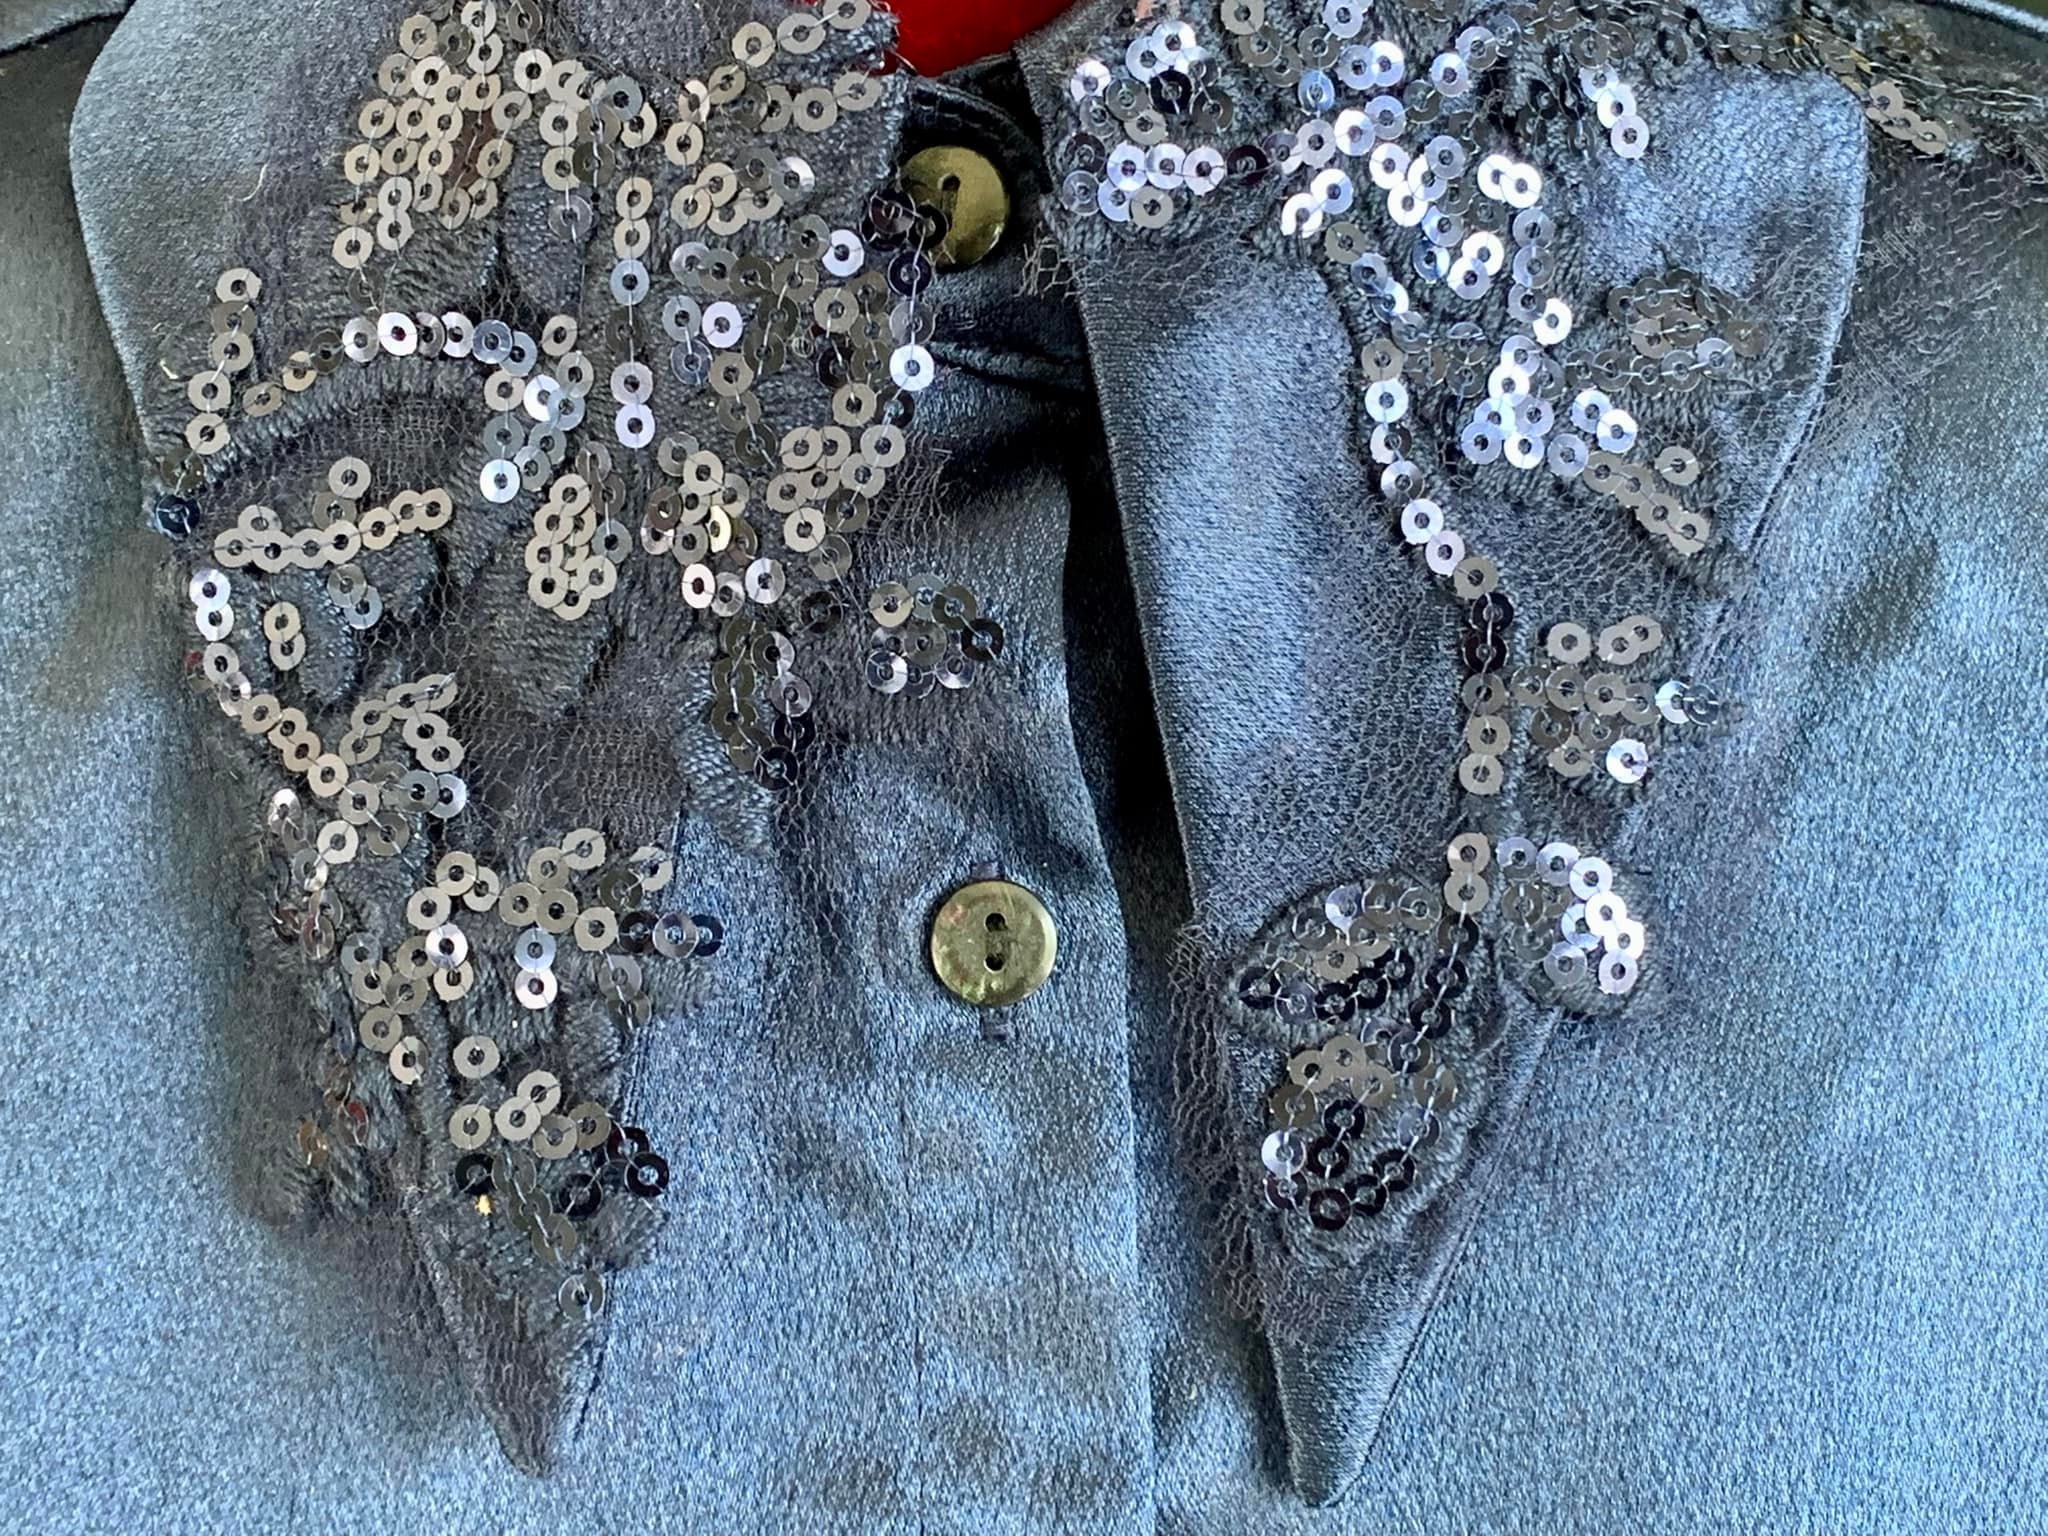 White Crochet Lace Collar, Vintage Style Collar, Lolita Fashion Collar  Accesories, Victorian Style Collar 